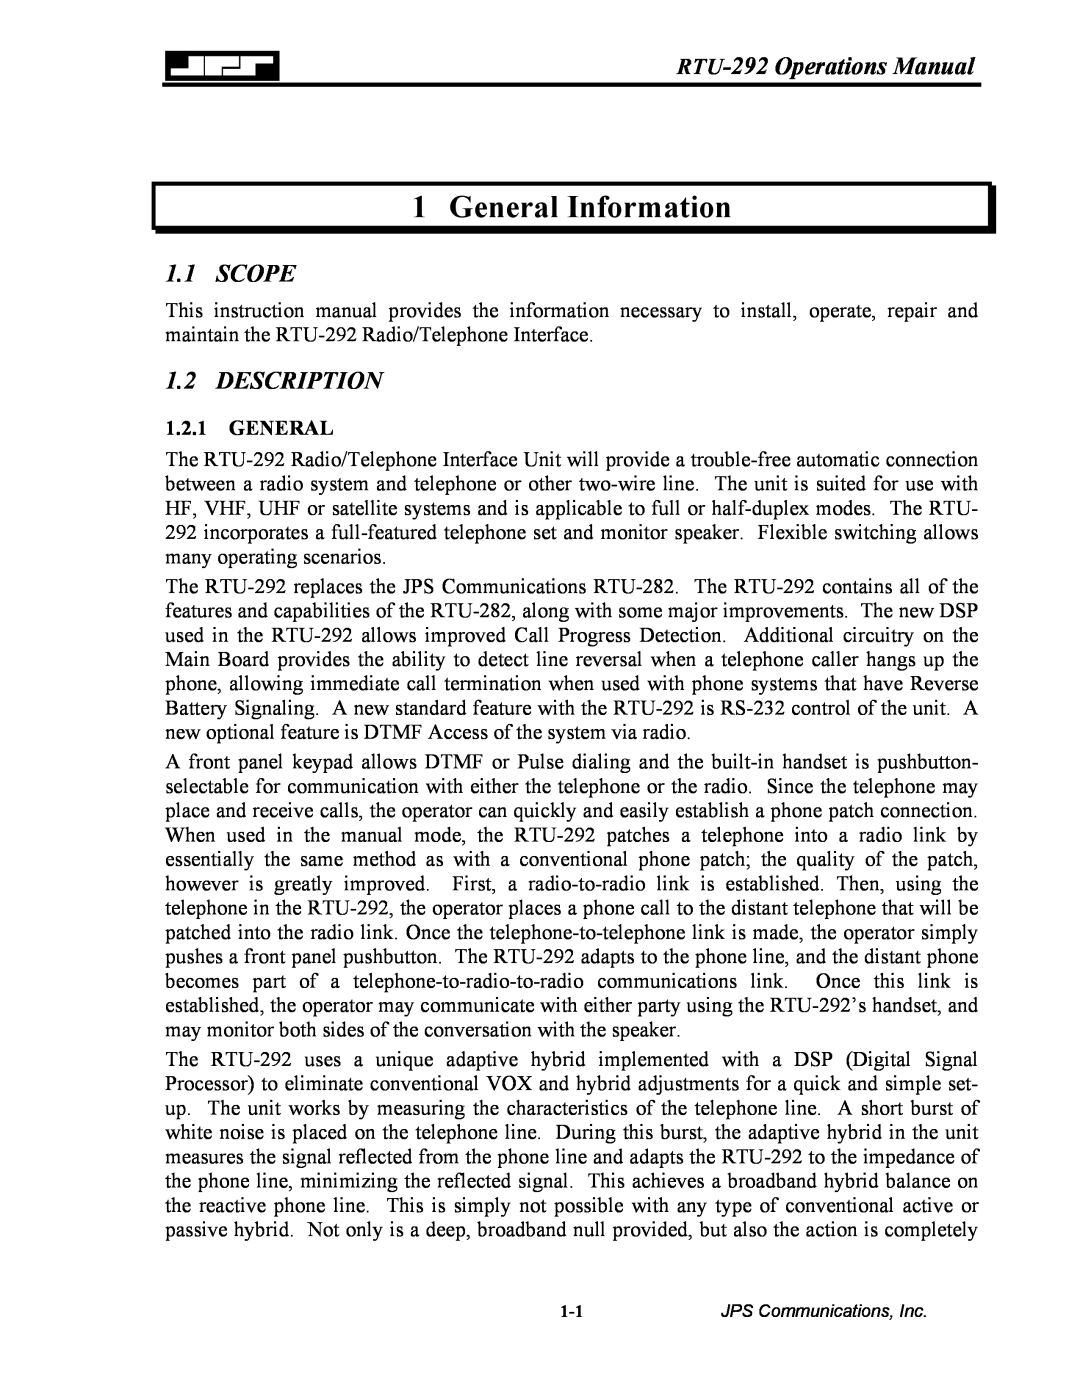 Nortel Networks operation manual General Information, Scope, Description, RTU-292 Operations Manual 